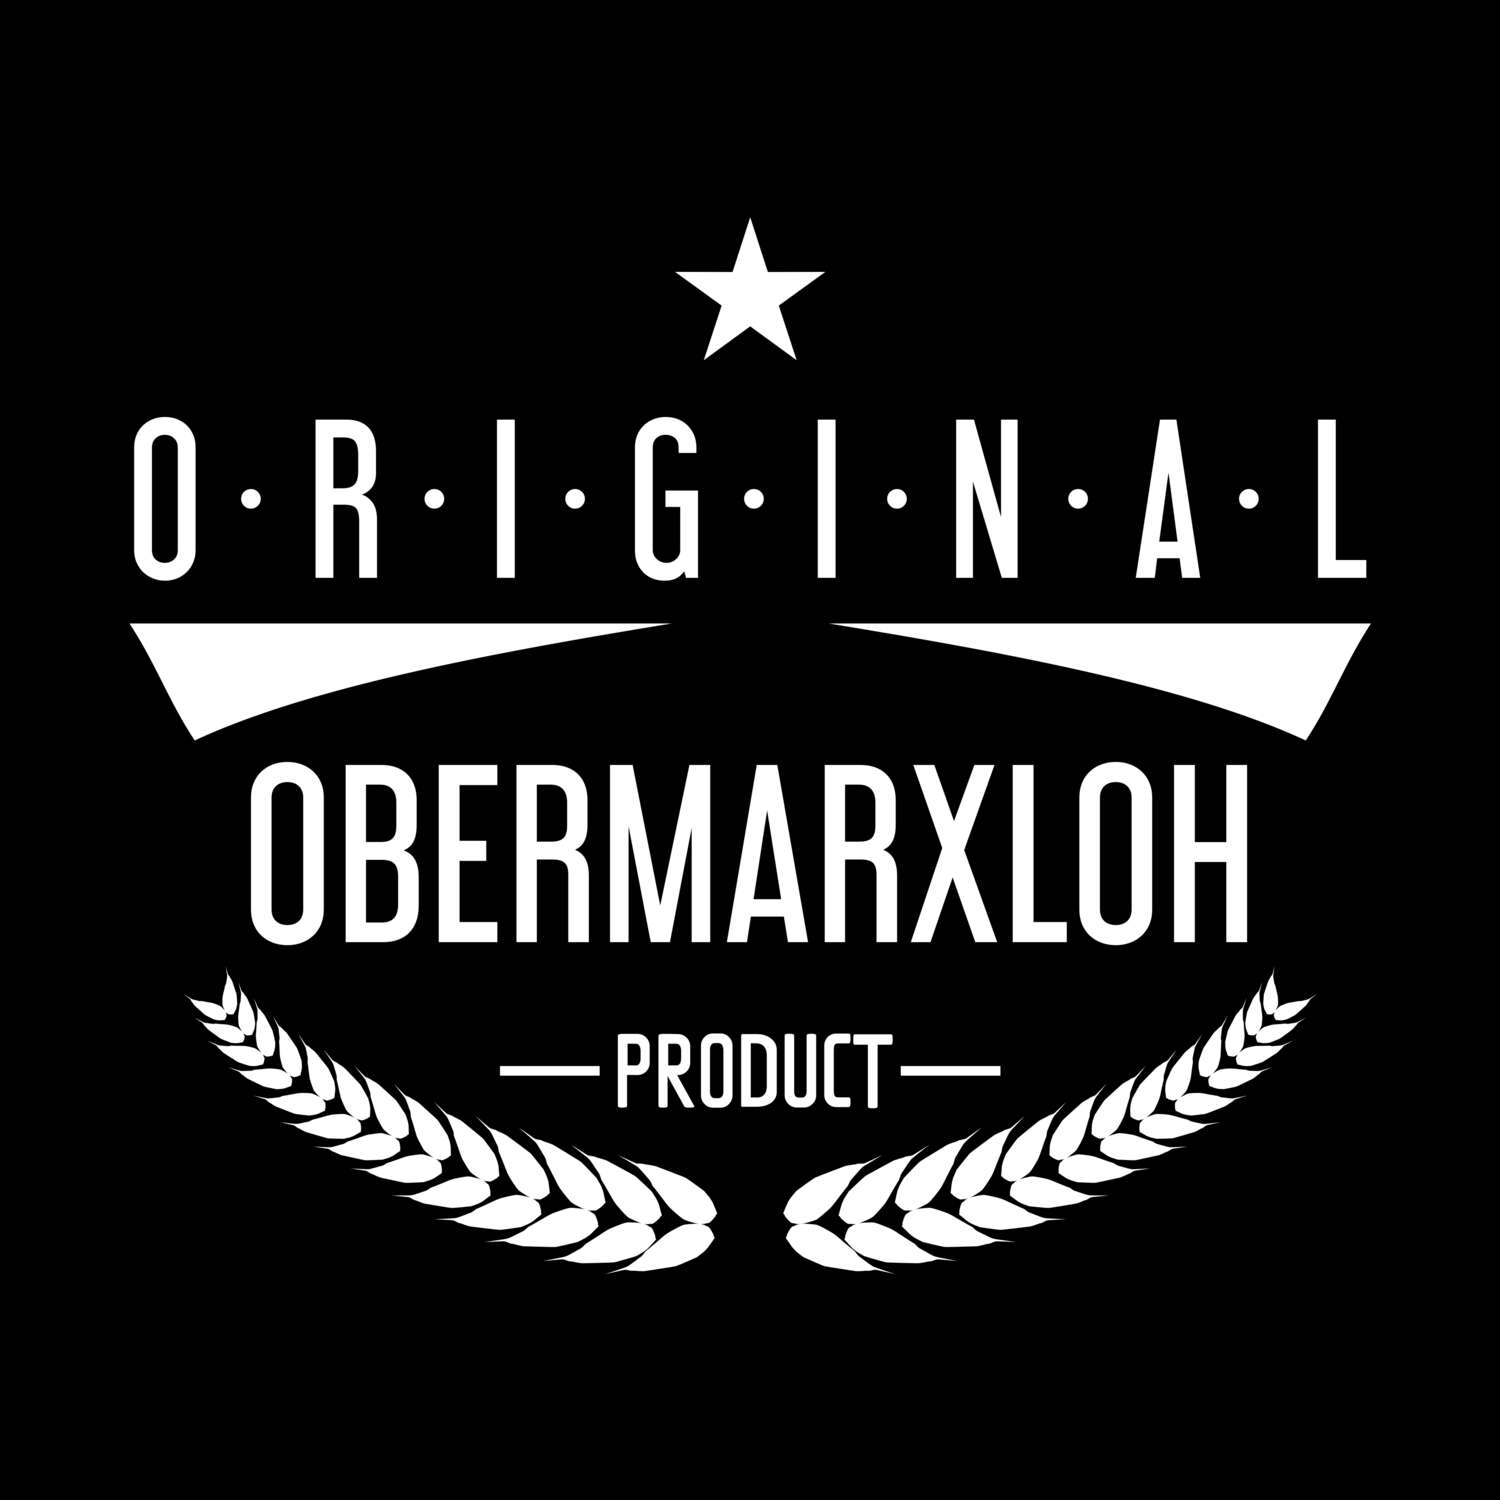 Obermarxloh T-Shirt »Original Product«